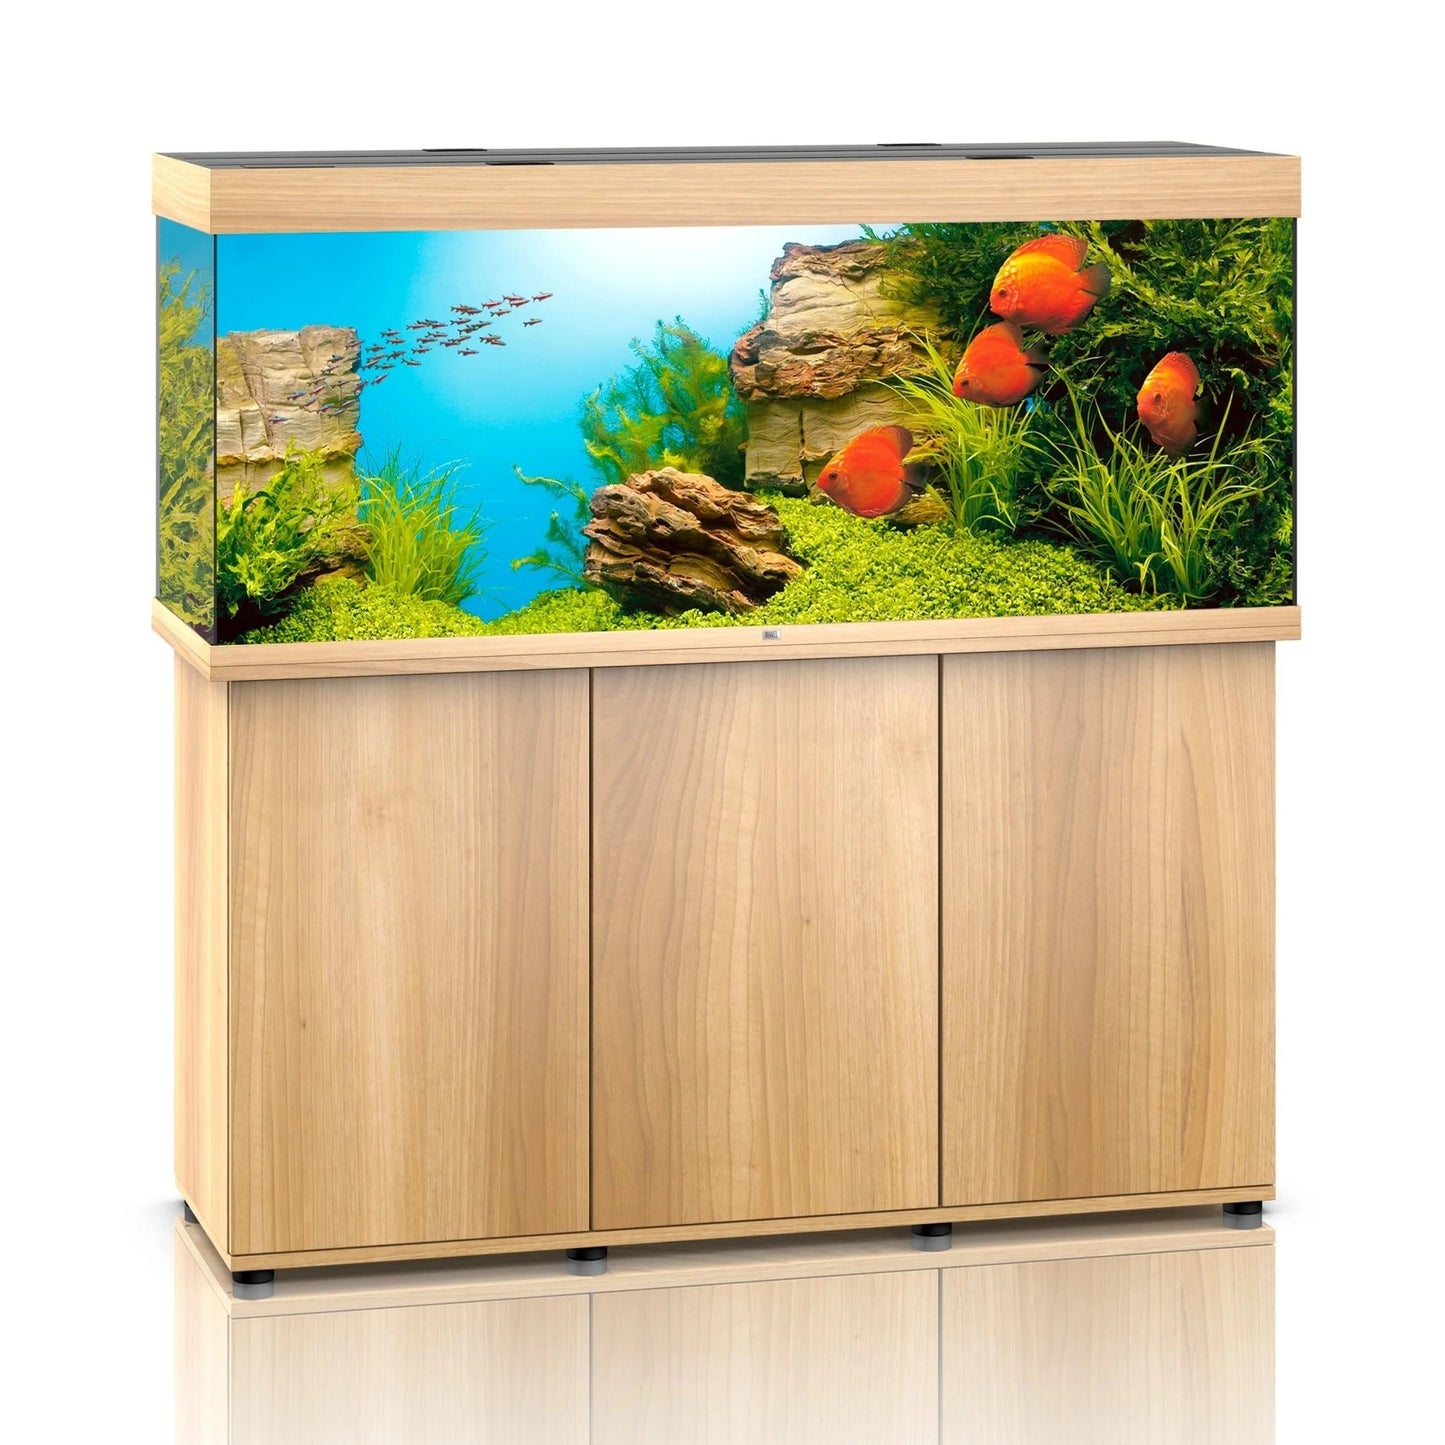 Juwel Aquarium & Cabinet Rio 450 LED / Light Wood